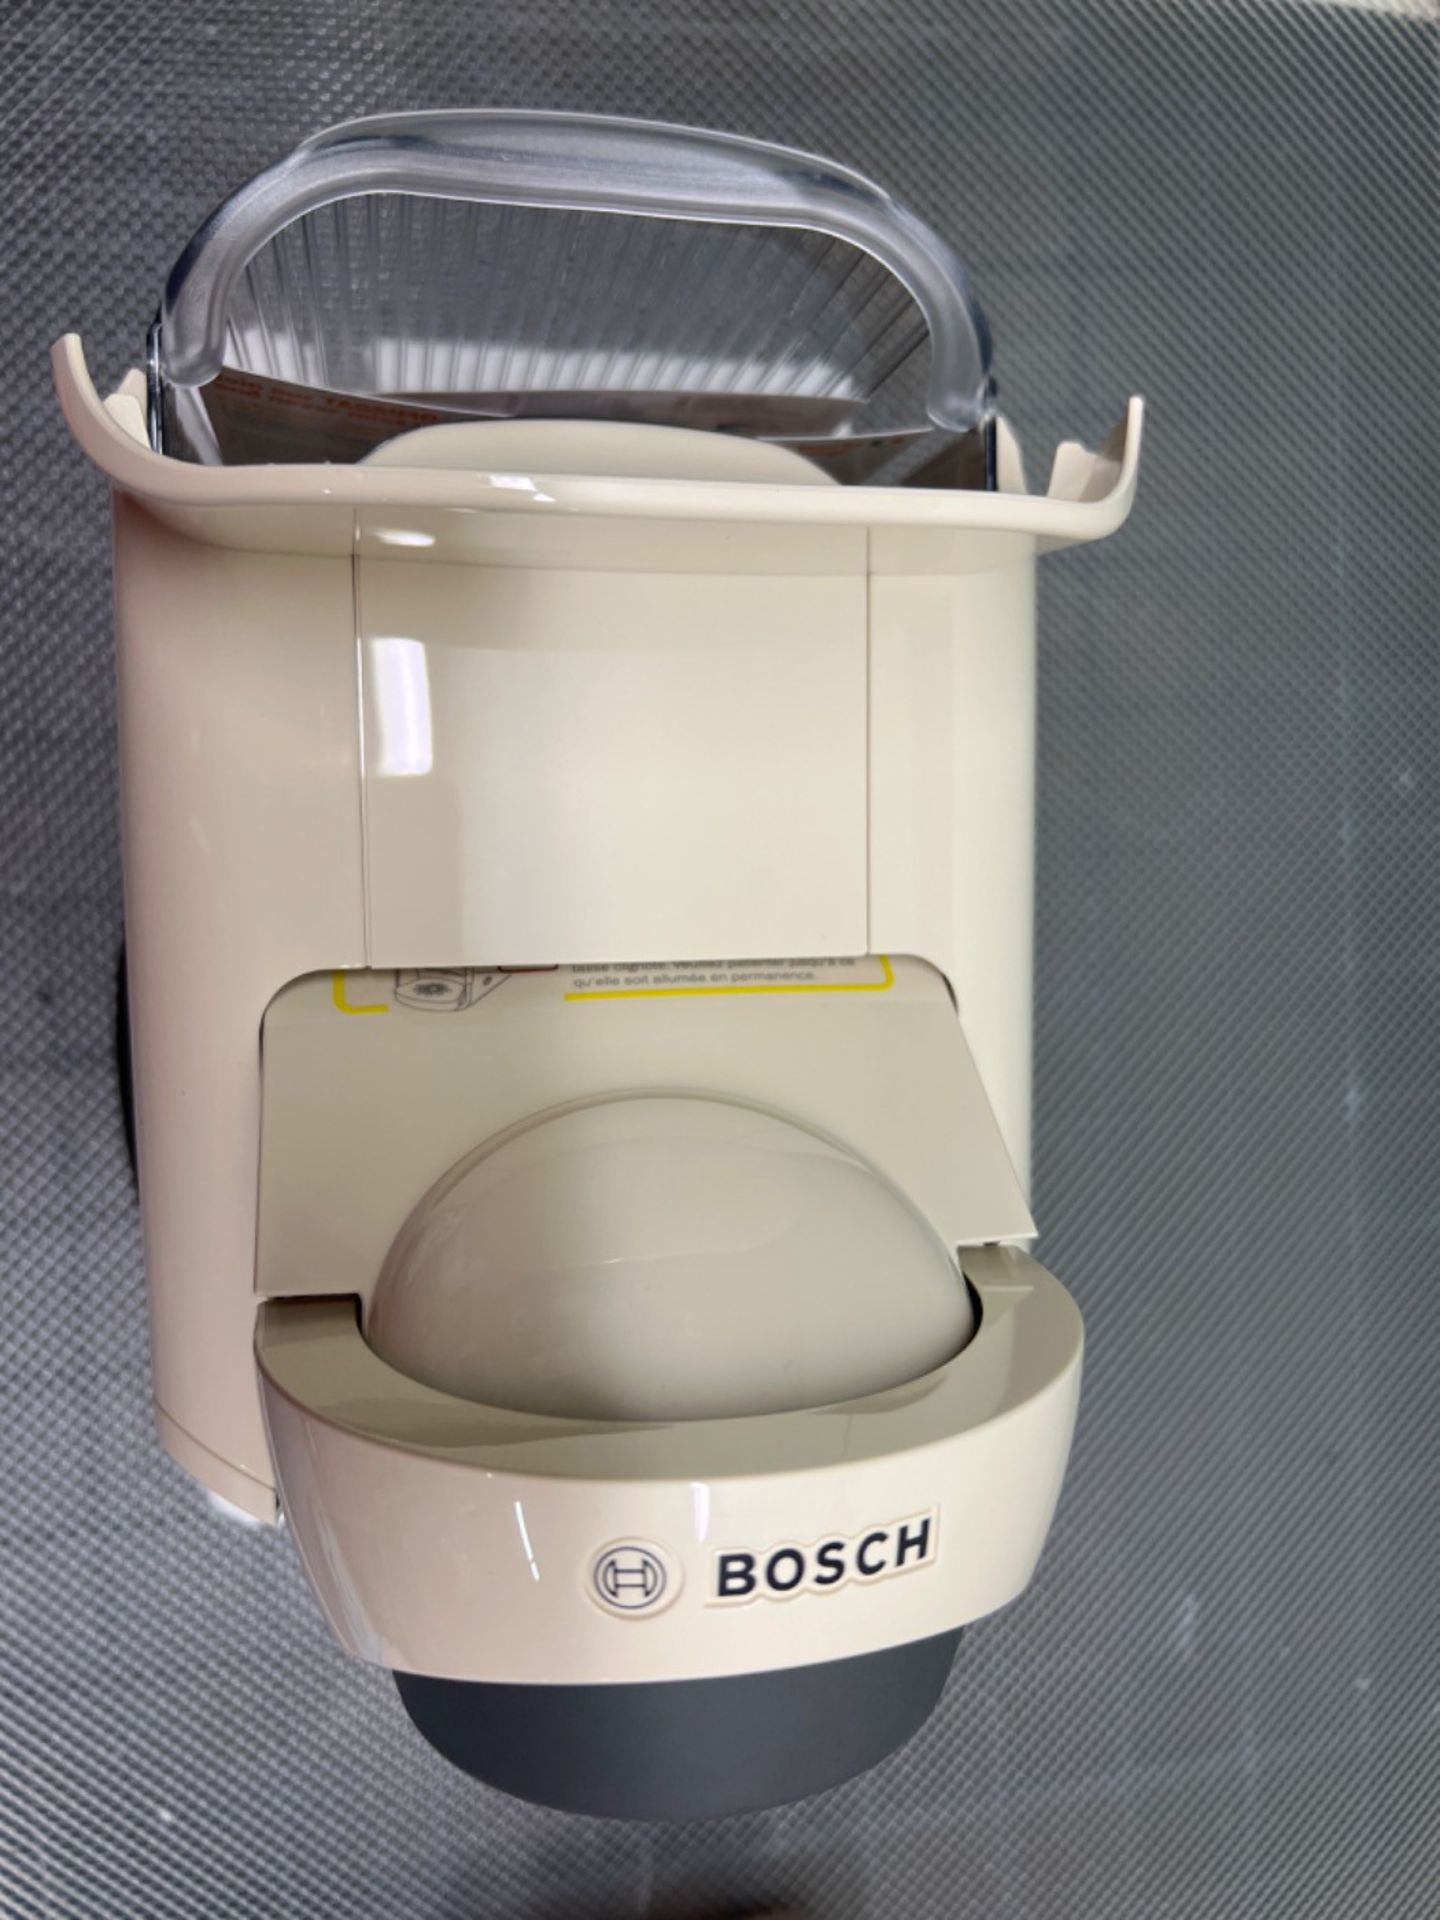 Tassimo by Bosch Suny 'Special Edition' TAS3107GB Coffee Machine,1300 Watt, 0.8 Litre - Cream - Image 3 of 3